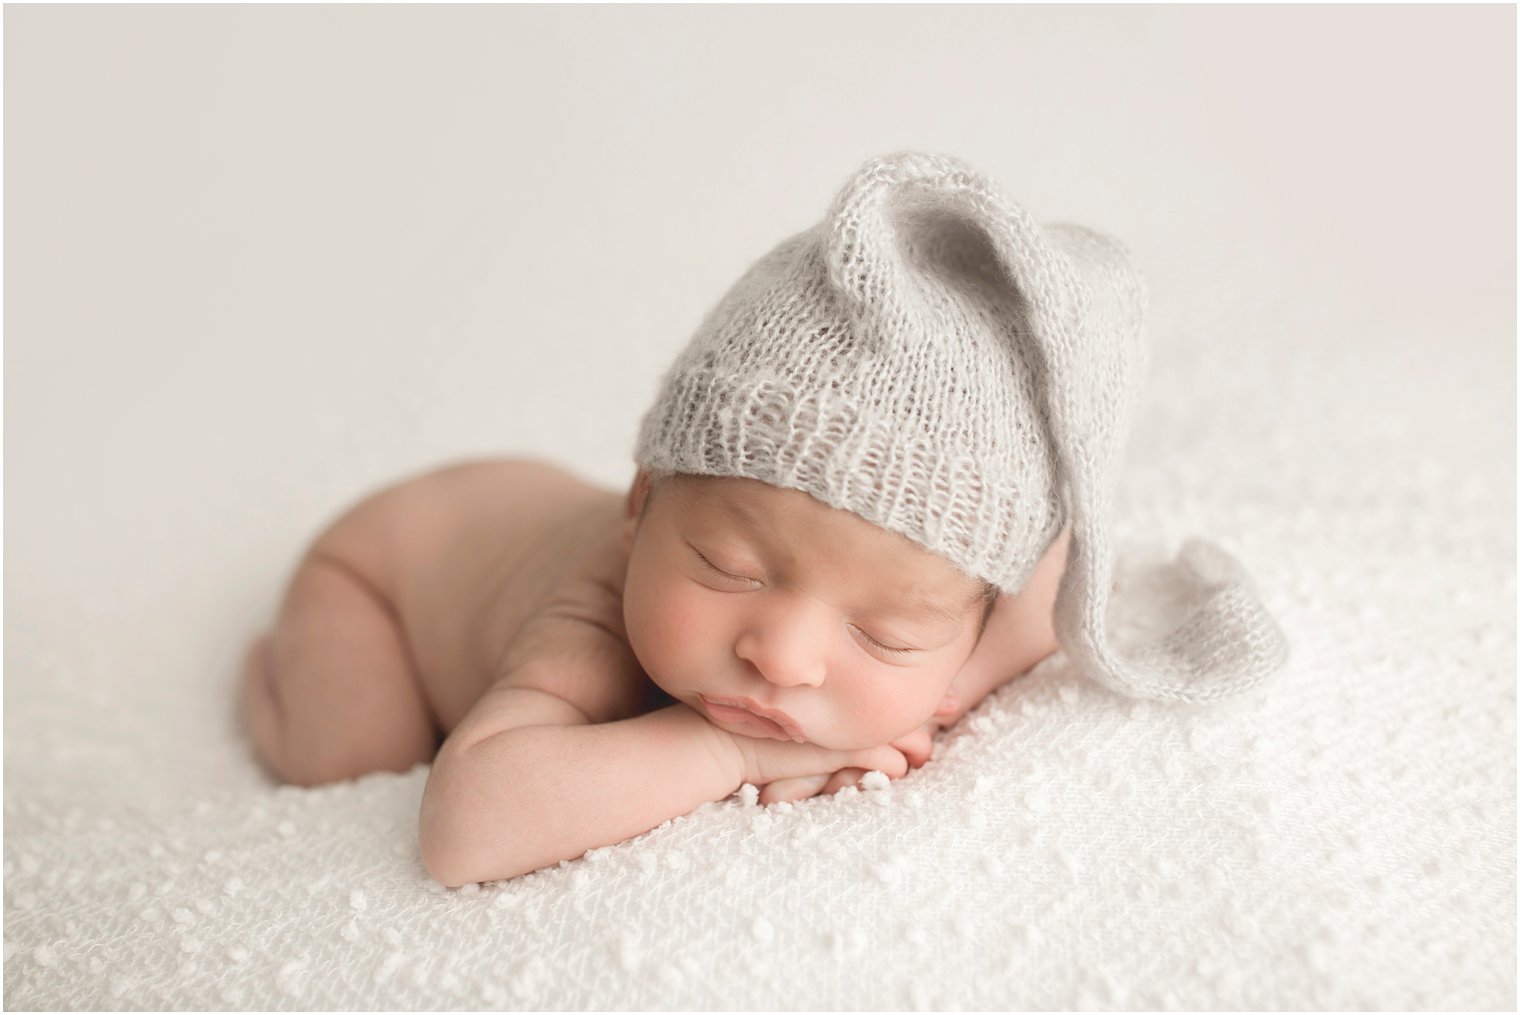 Newborn boy with sleepy hat